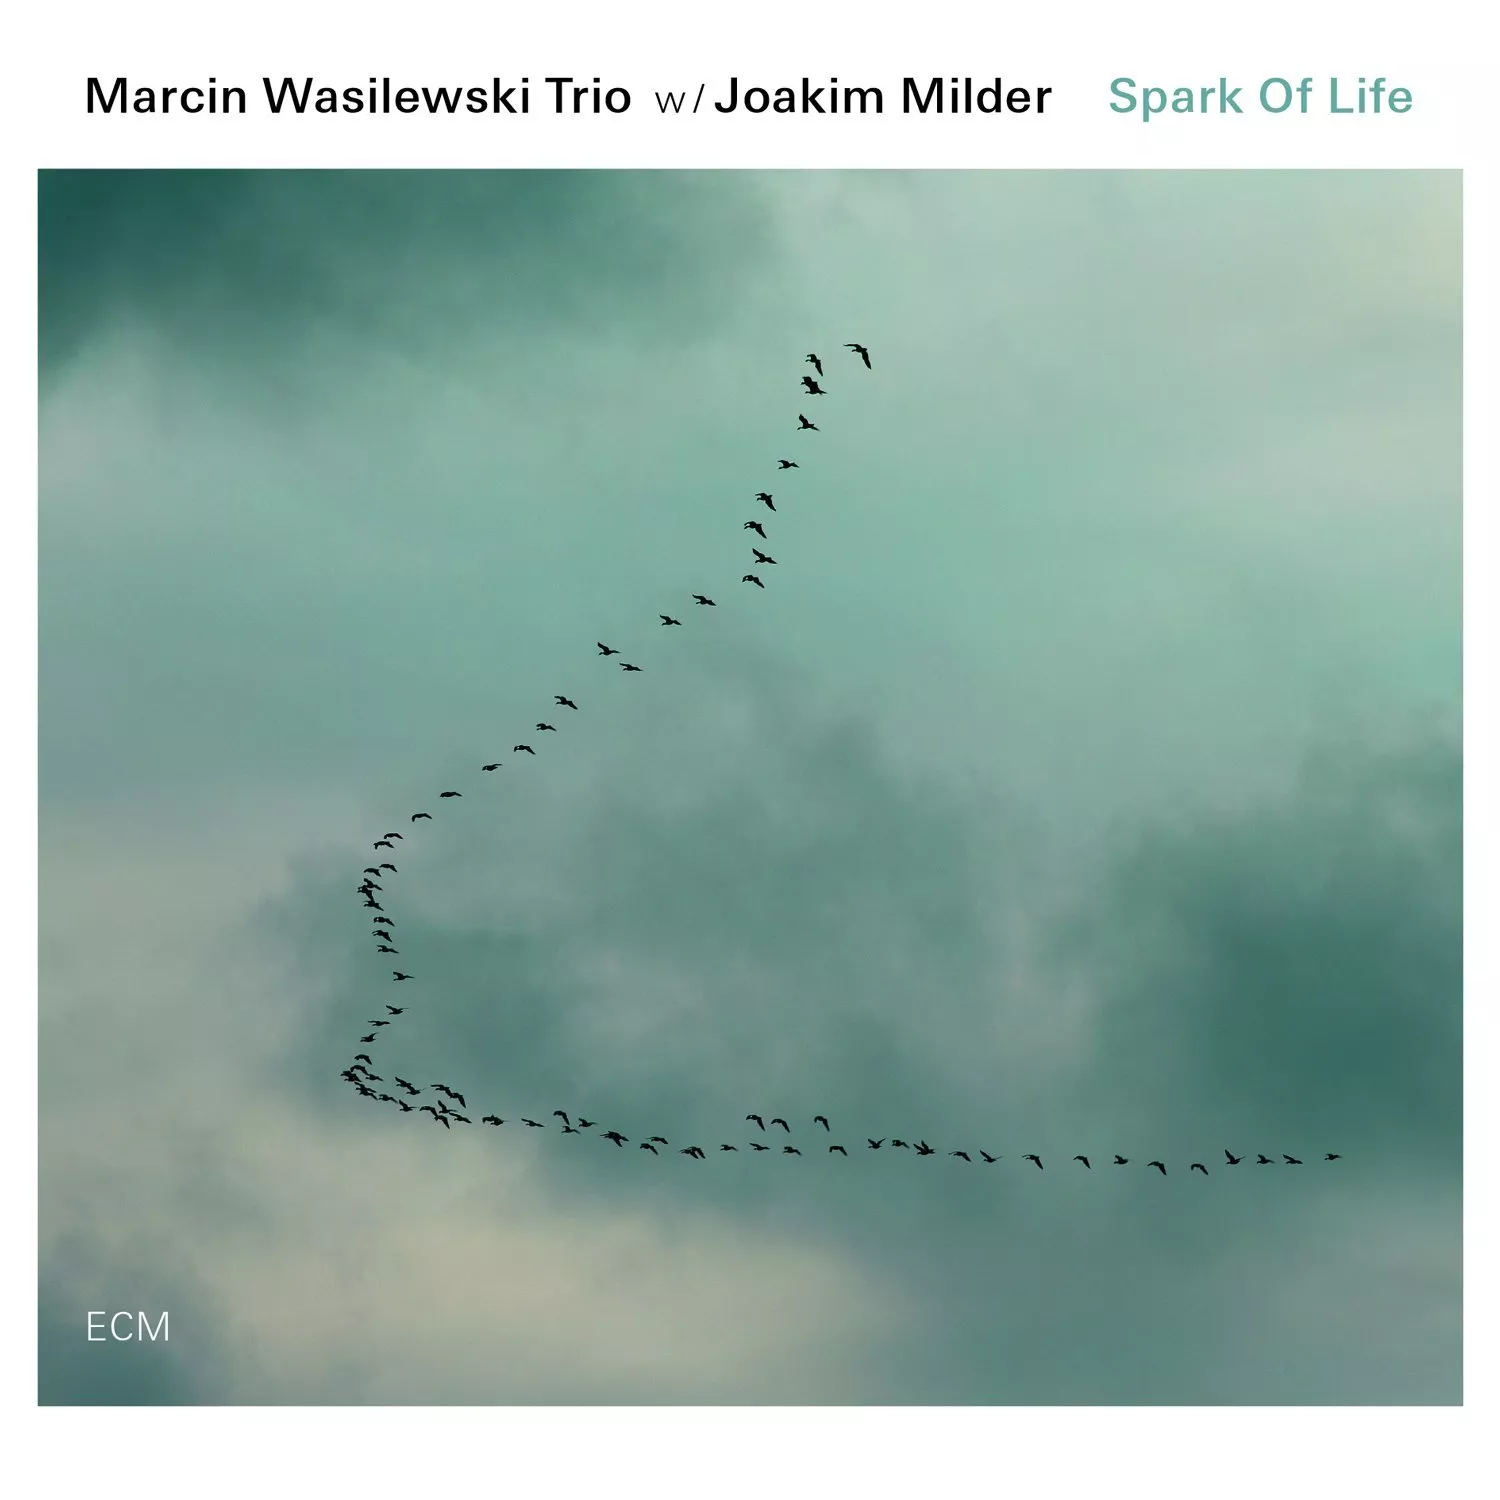 Spark of Life - Marcin Wasilewski Trio w/ Joakim Milder